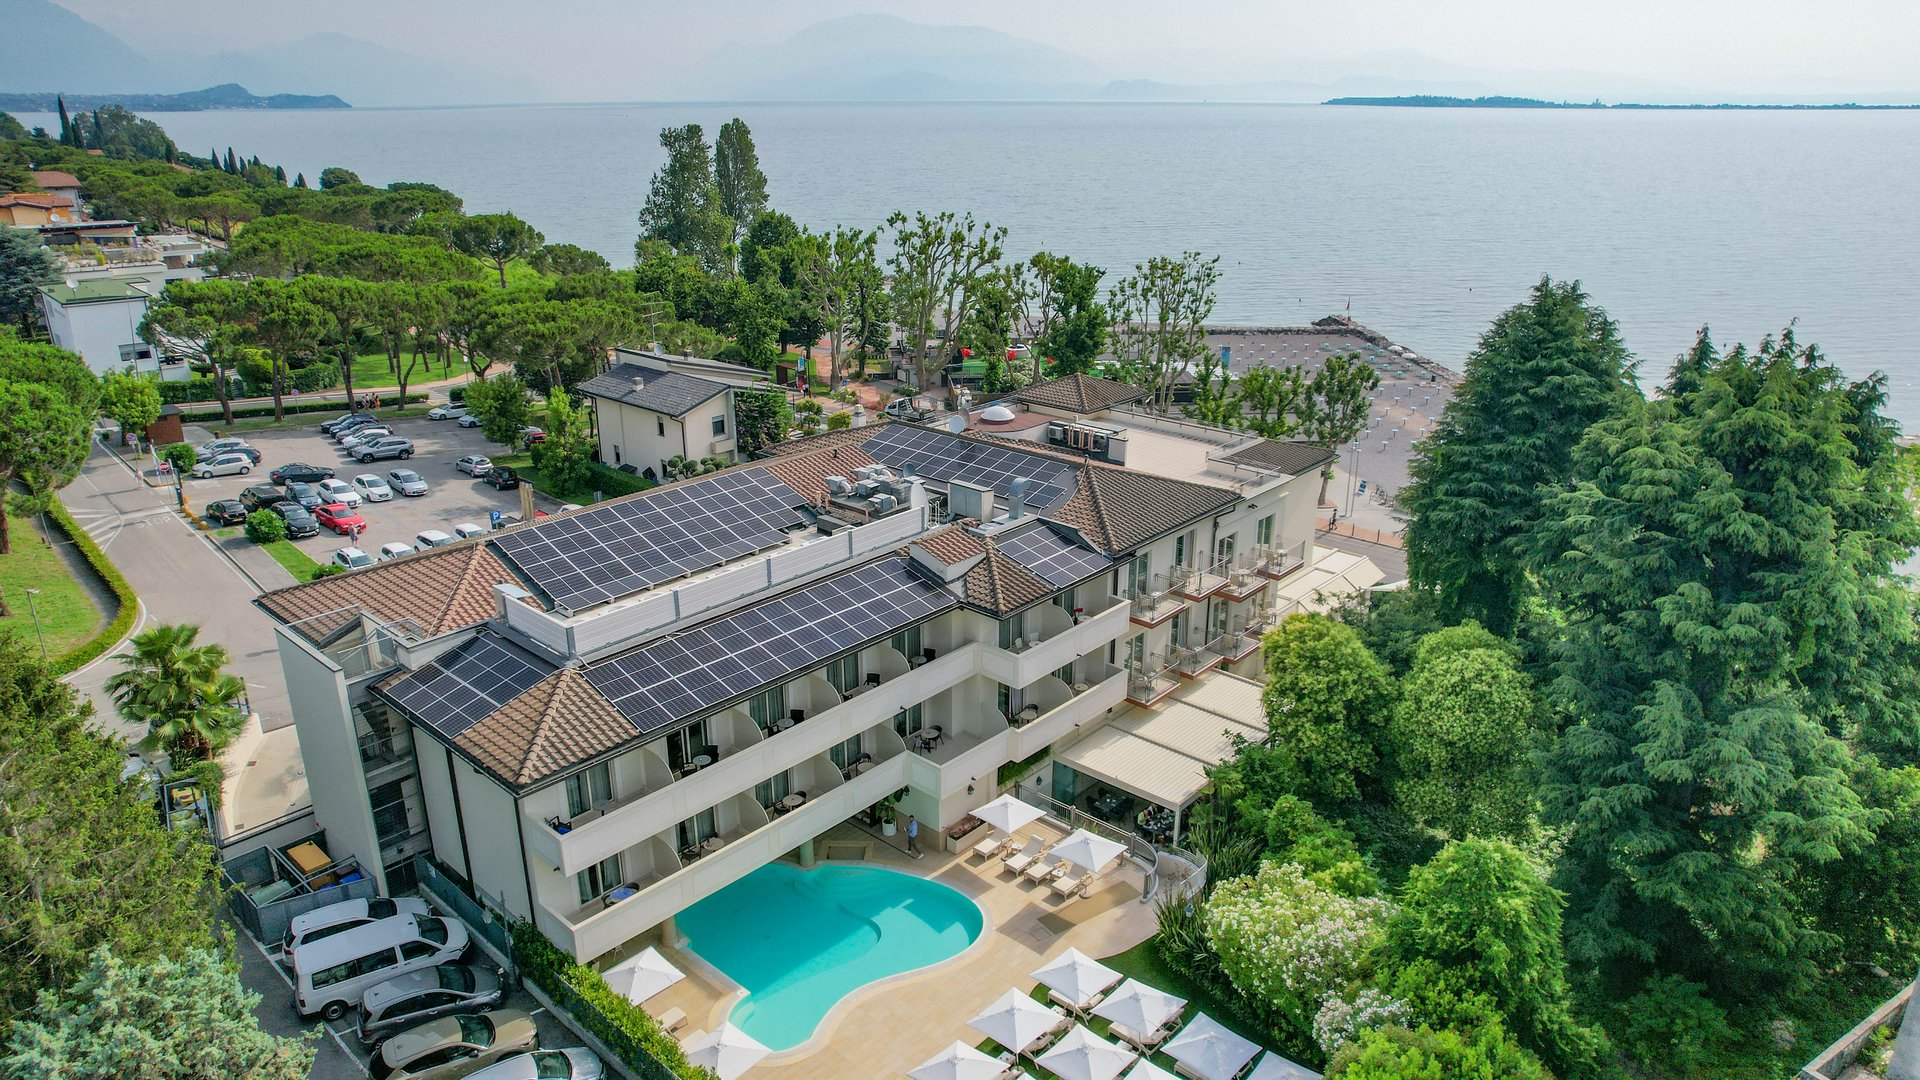 Villa Rosa Hotel, Lake Garda: safe, carefree holidays